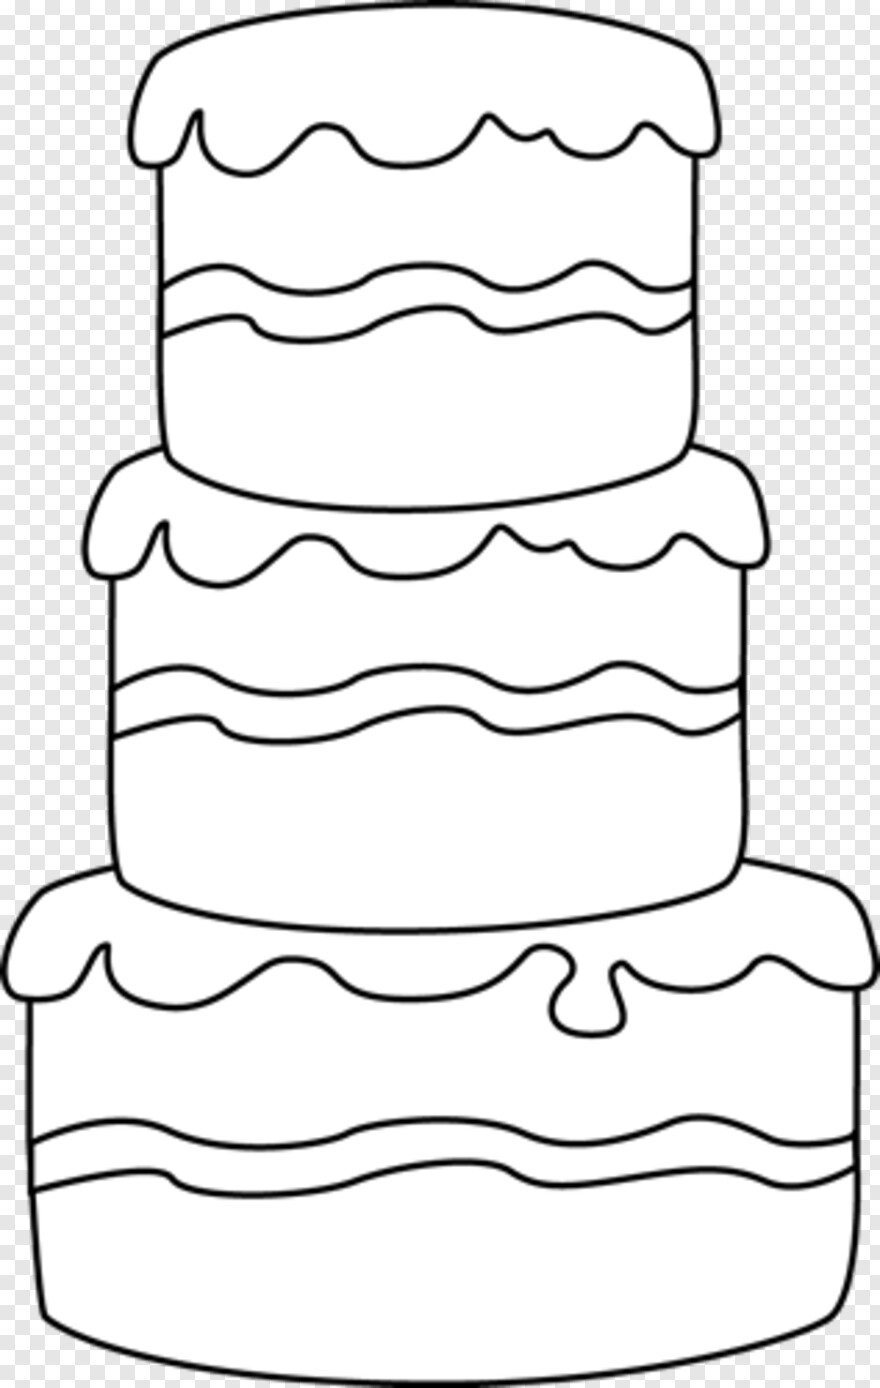 cake-clipart # 367028